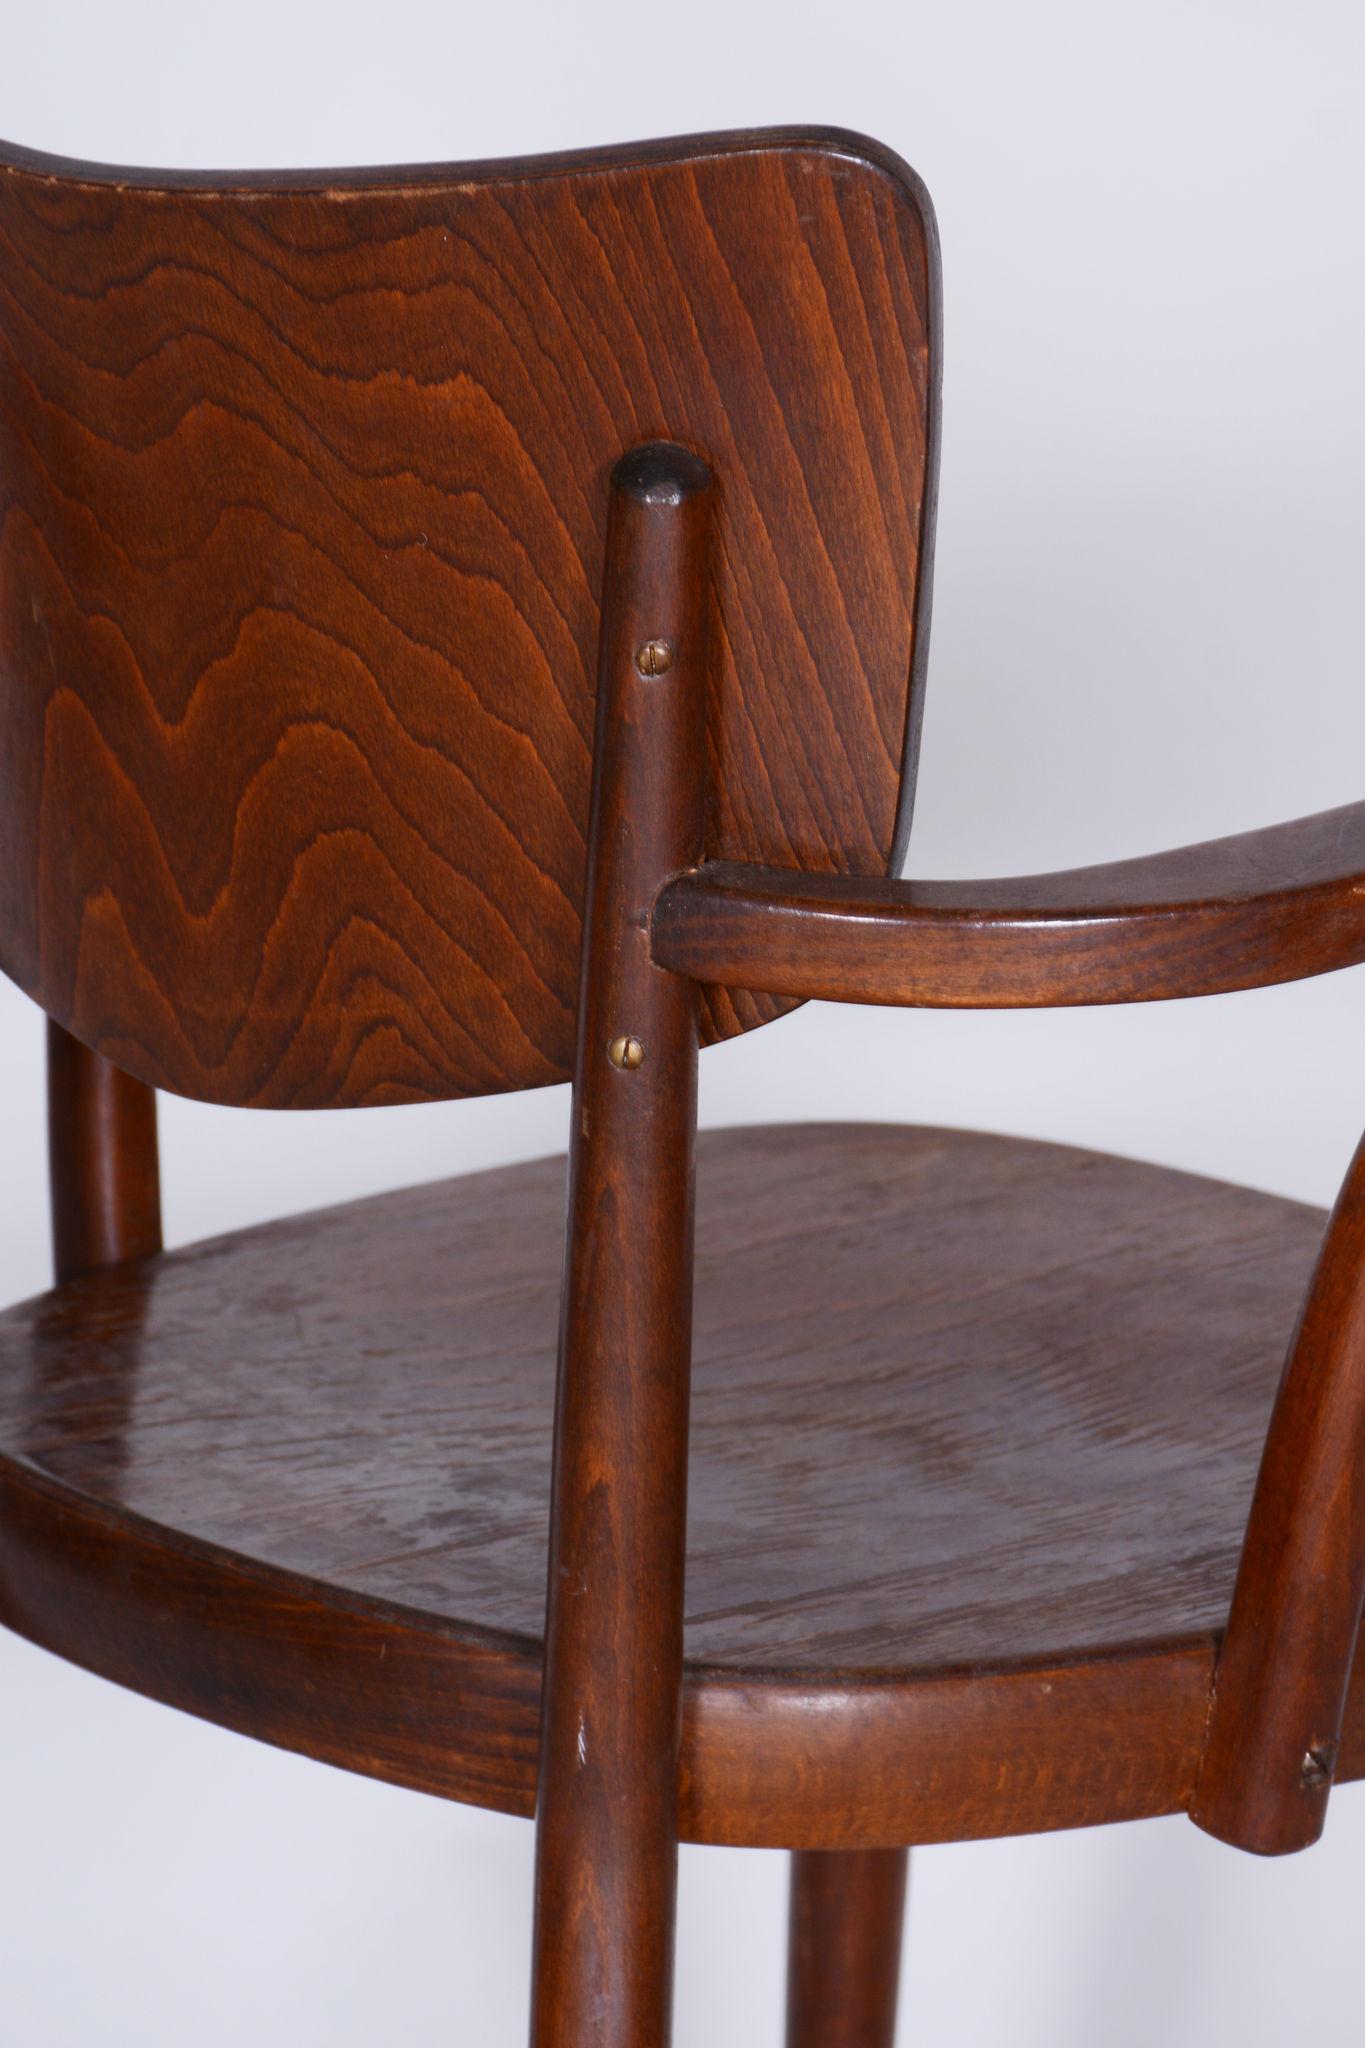 19th Century Original ArtDeco Beech Chair with Armrests by Ton, R. Hofman, Czechia, 1940s For Sale